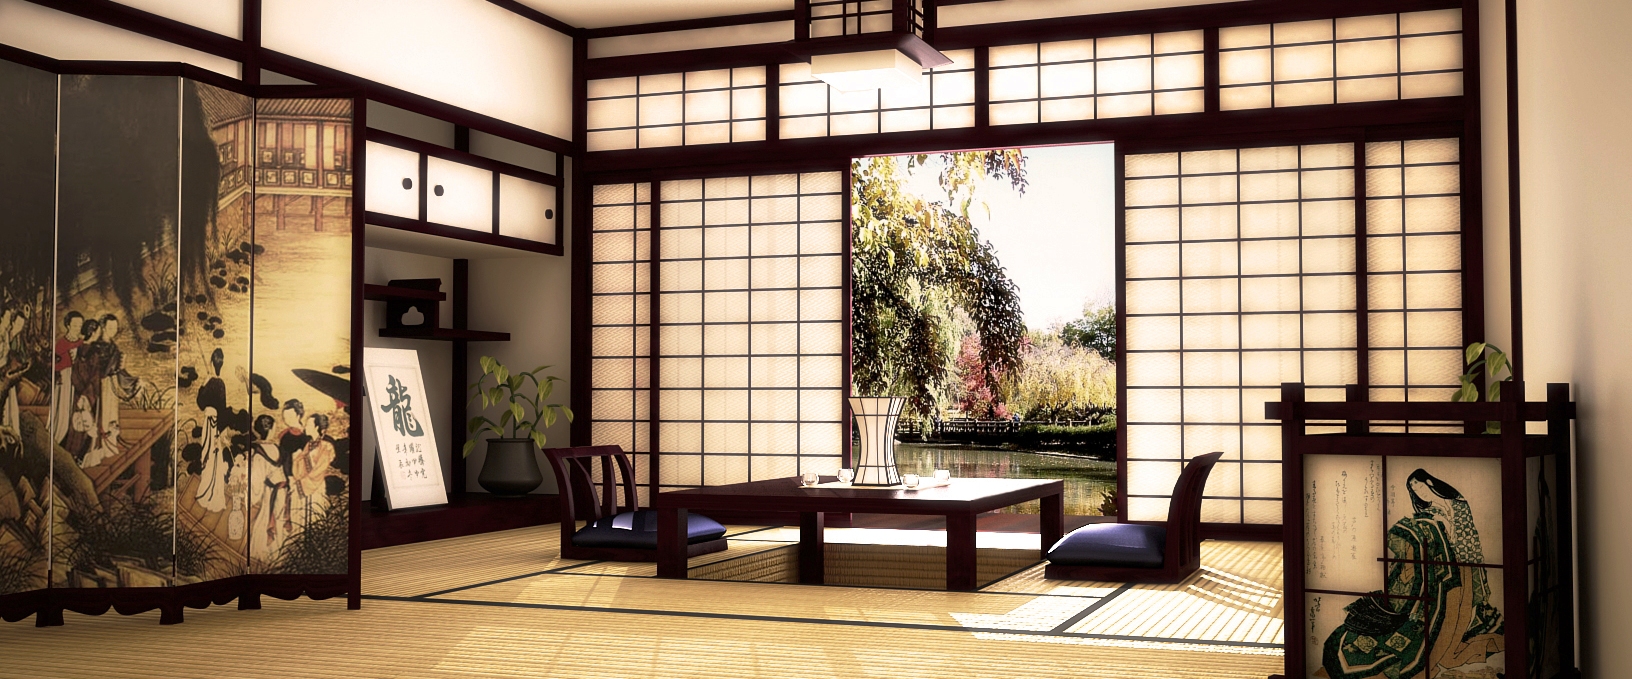 japanese house architecture interiors photo - 2